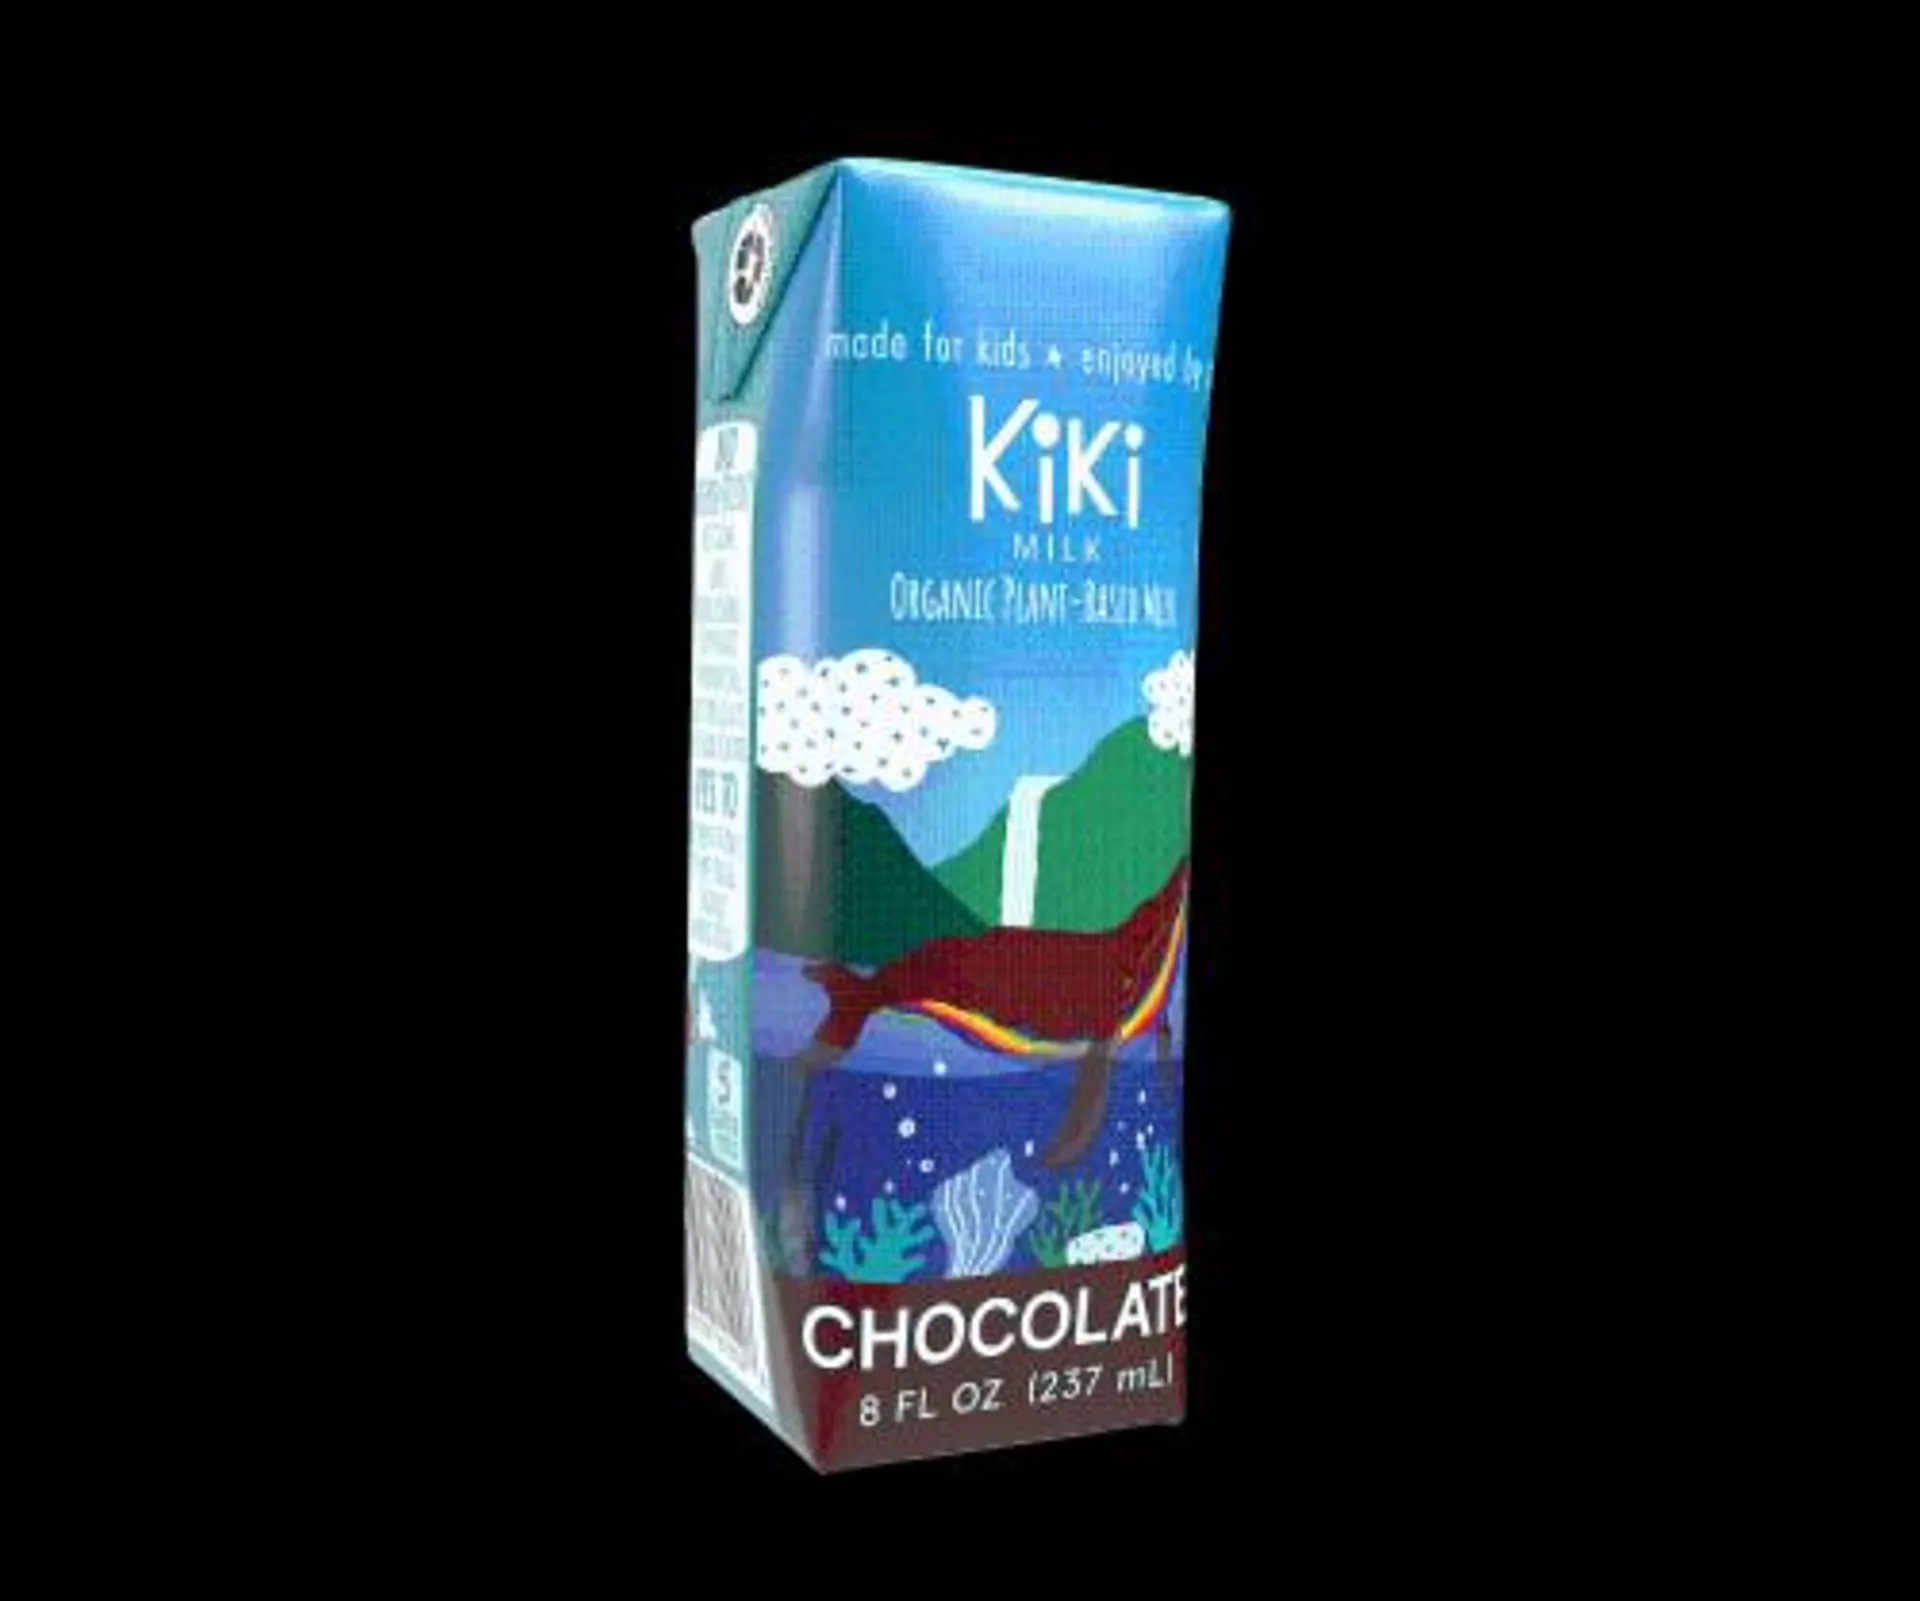 Kiki Milk - Chocolate Kiki Milk - 8 fl oz - Pack of 12